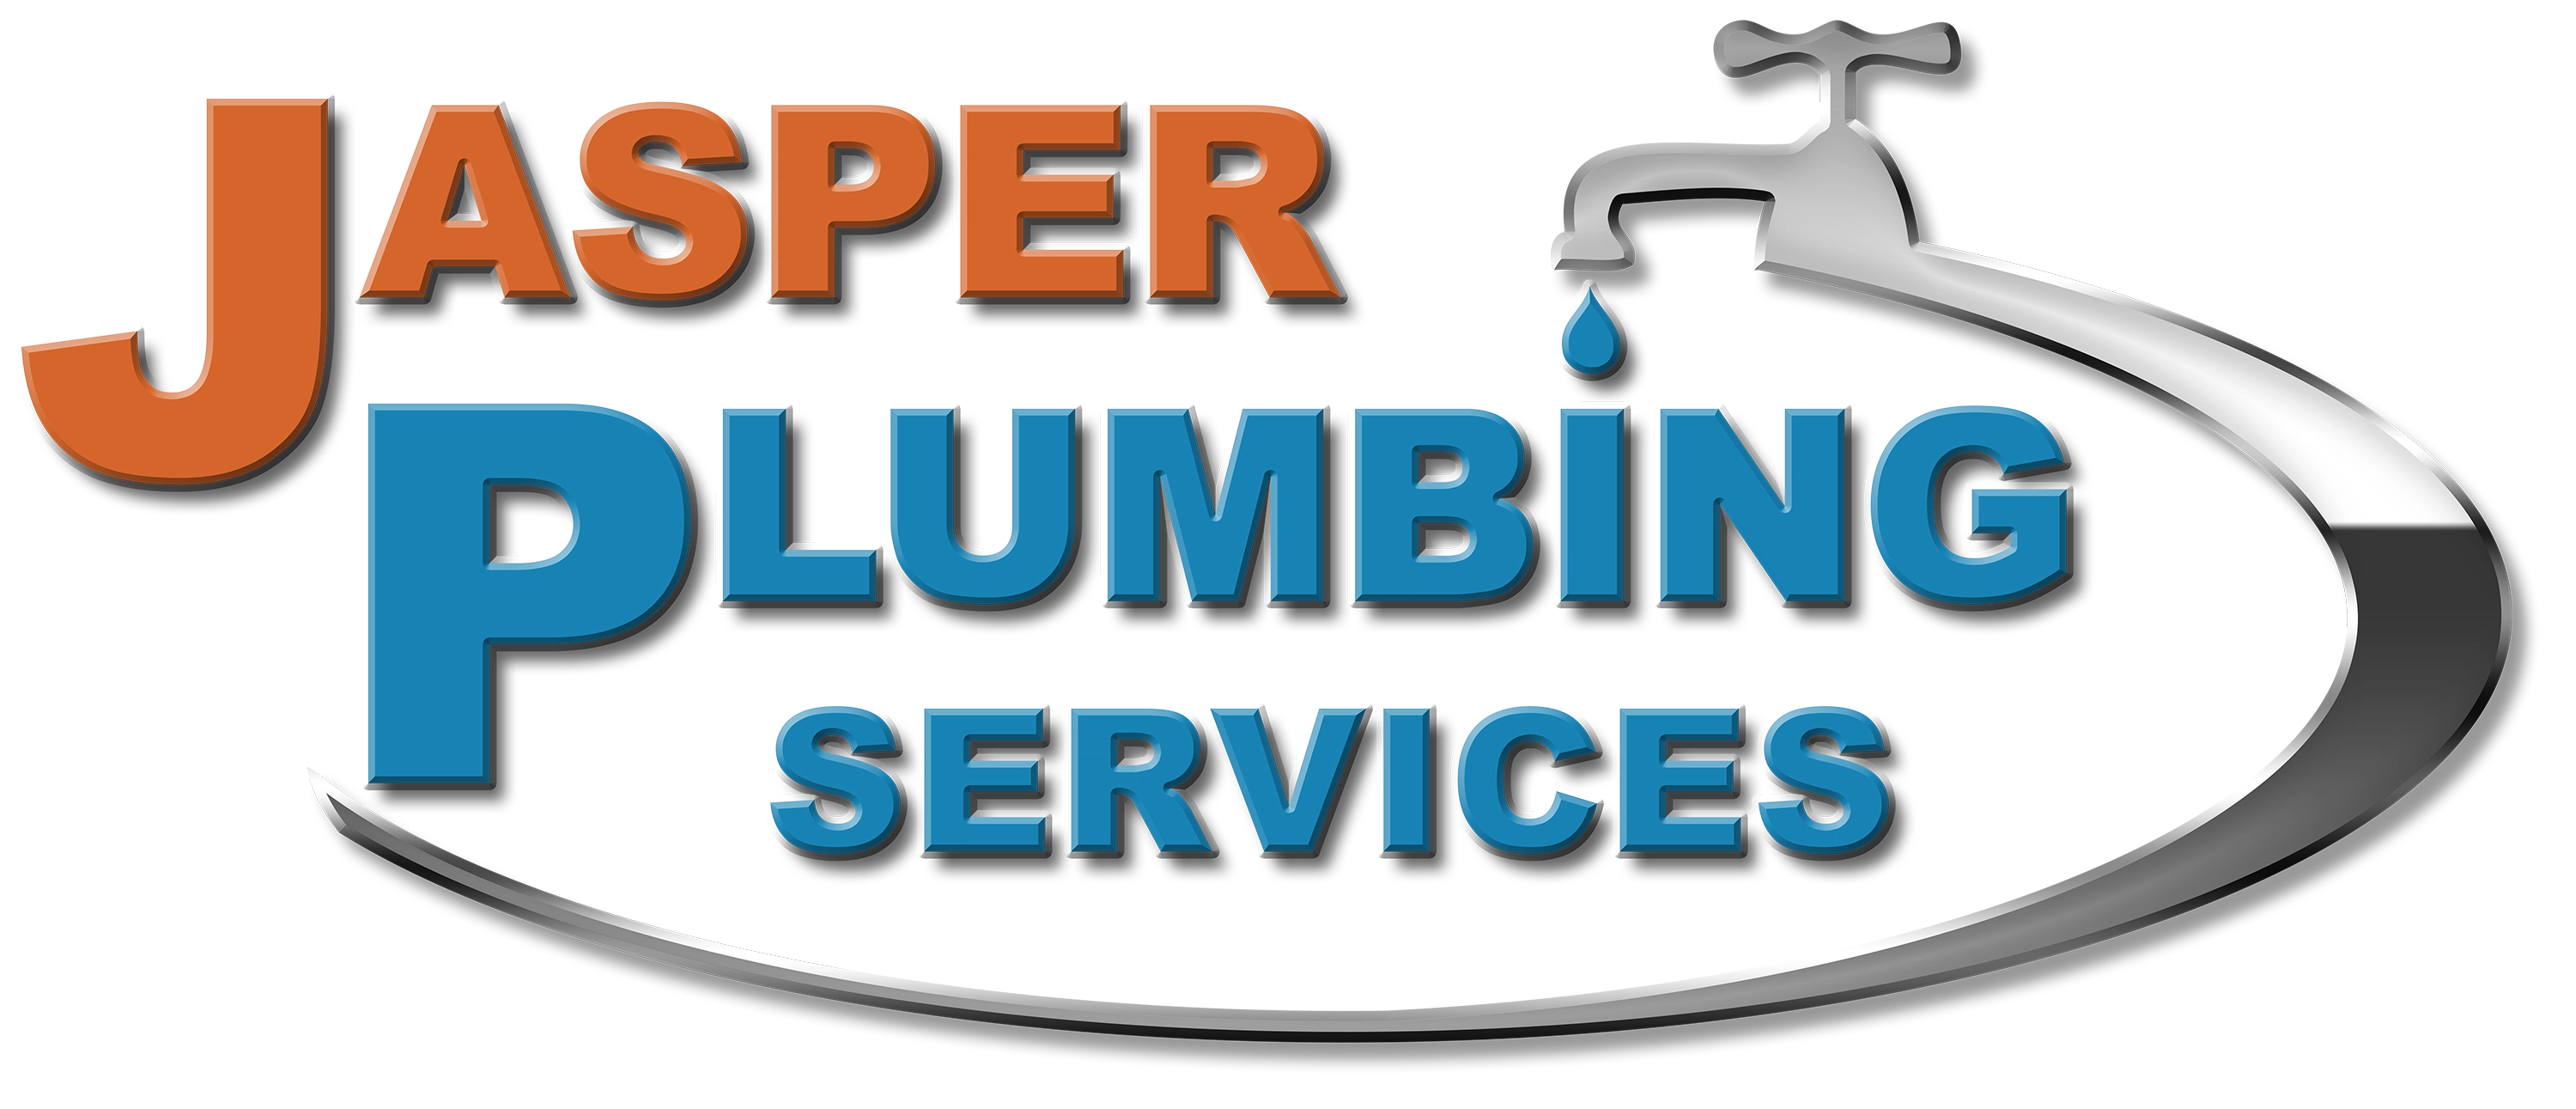 Jasper Plumbing Services, LLC Logo